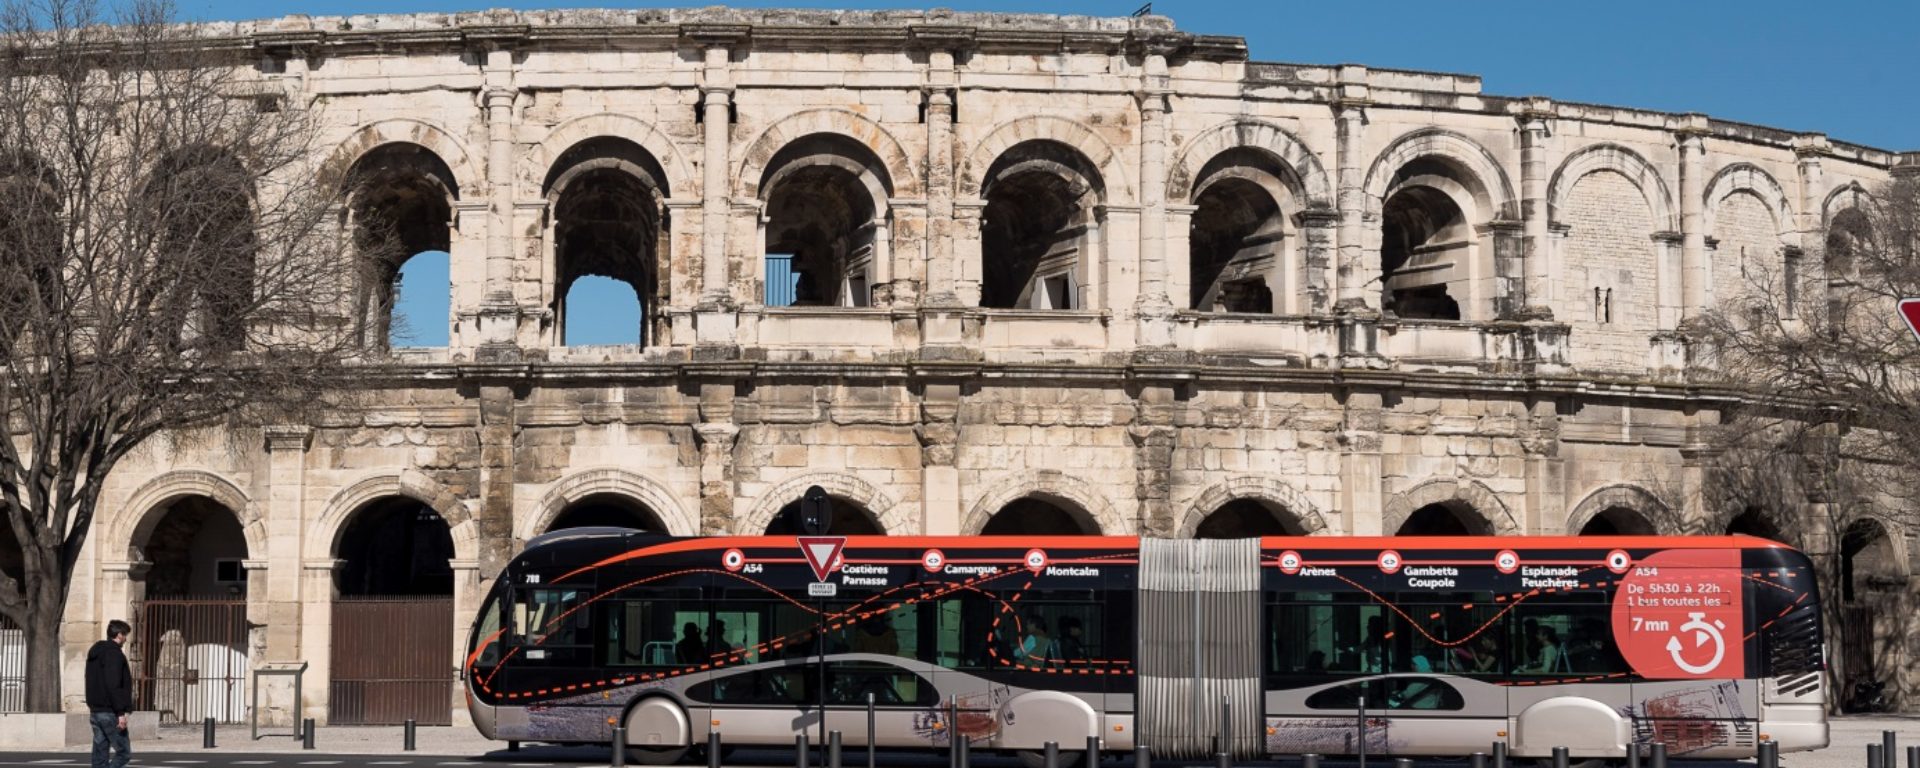 Transdev réseau urbain Tango Nîmes mobility company voyageurs transports commun publics